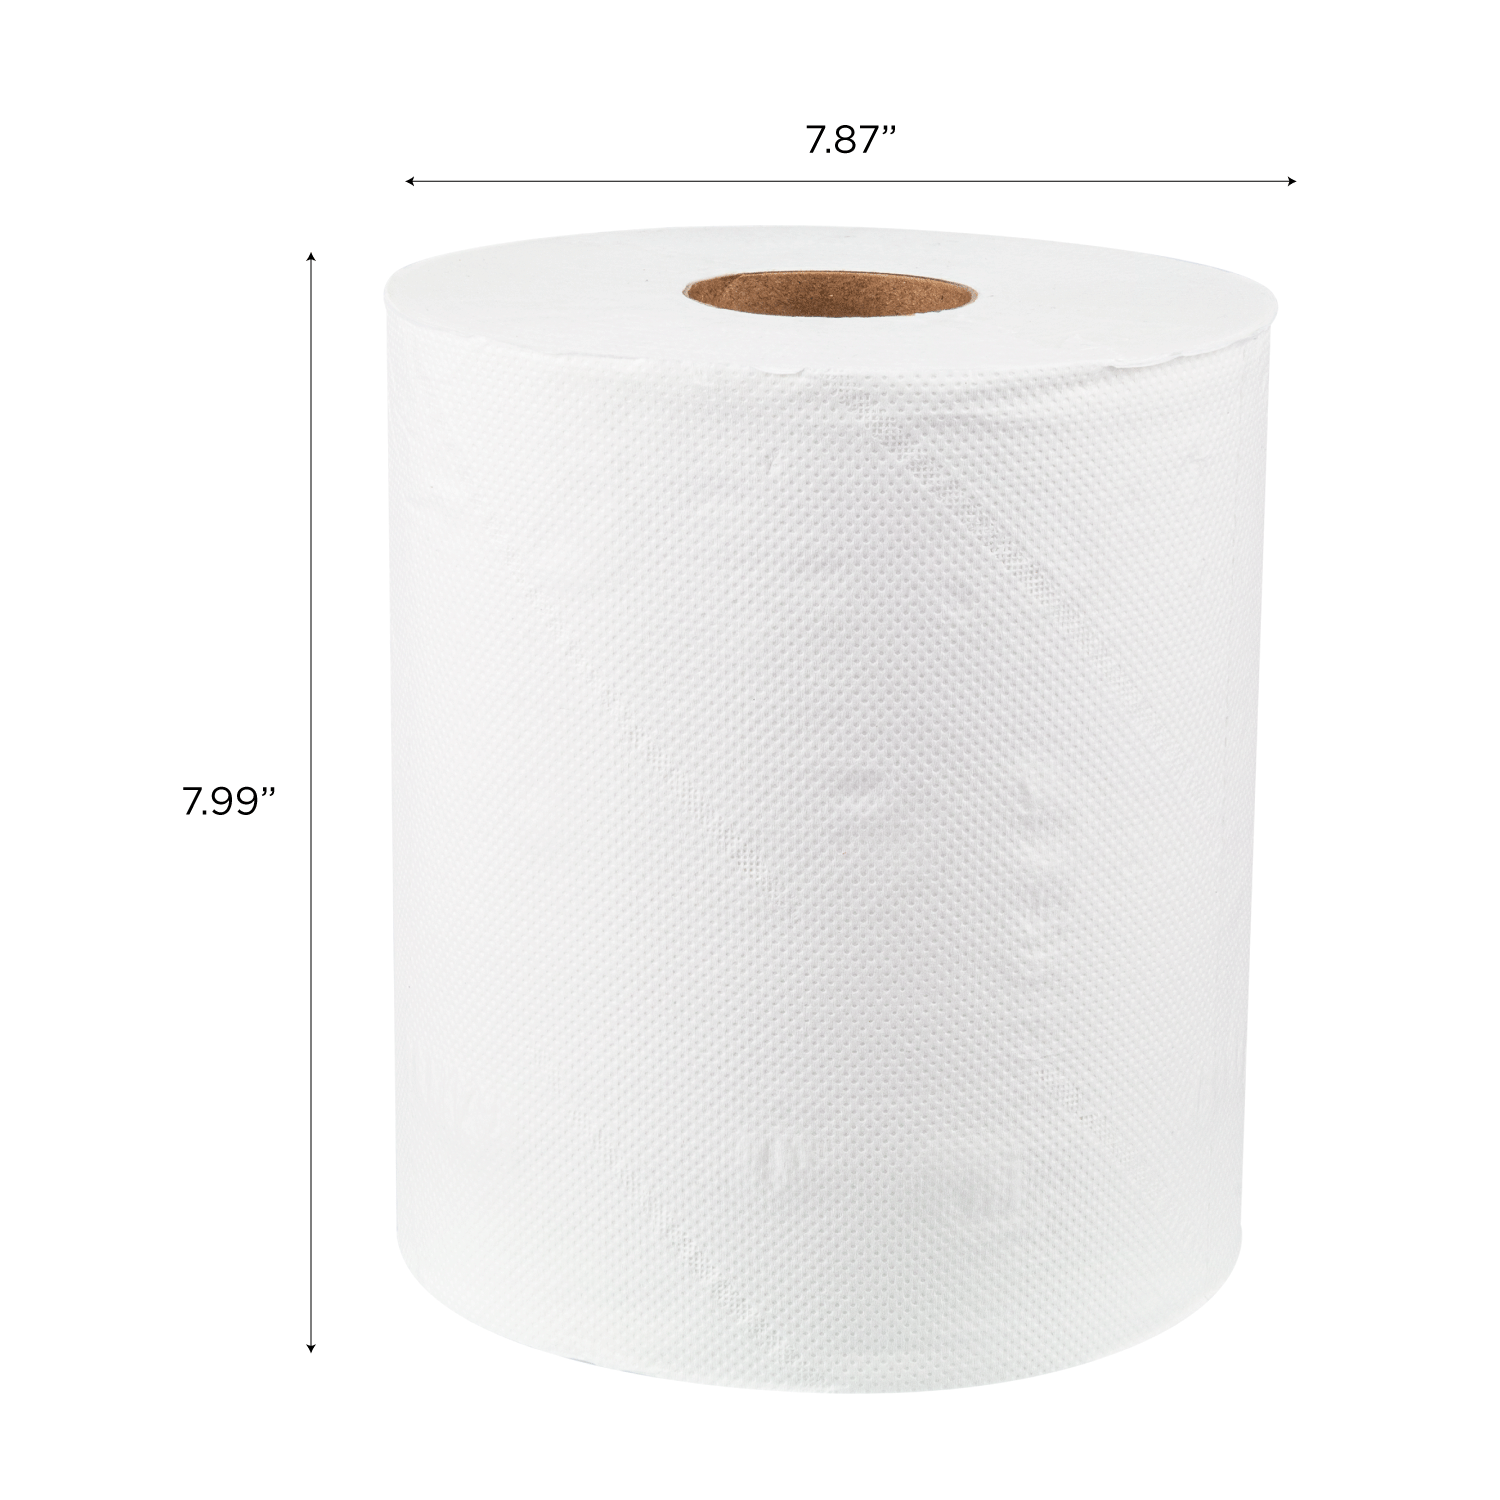 Karat 2-Ply Center Pull Paper Towel, White - Case of 6 rolls